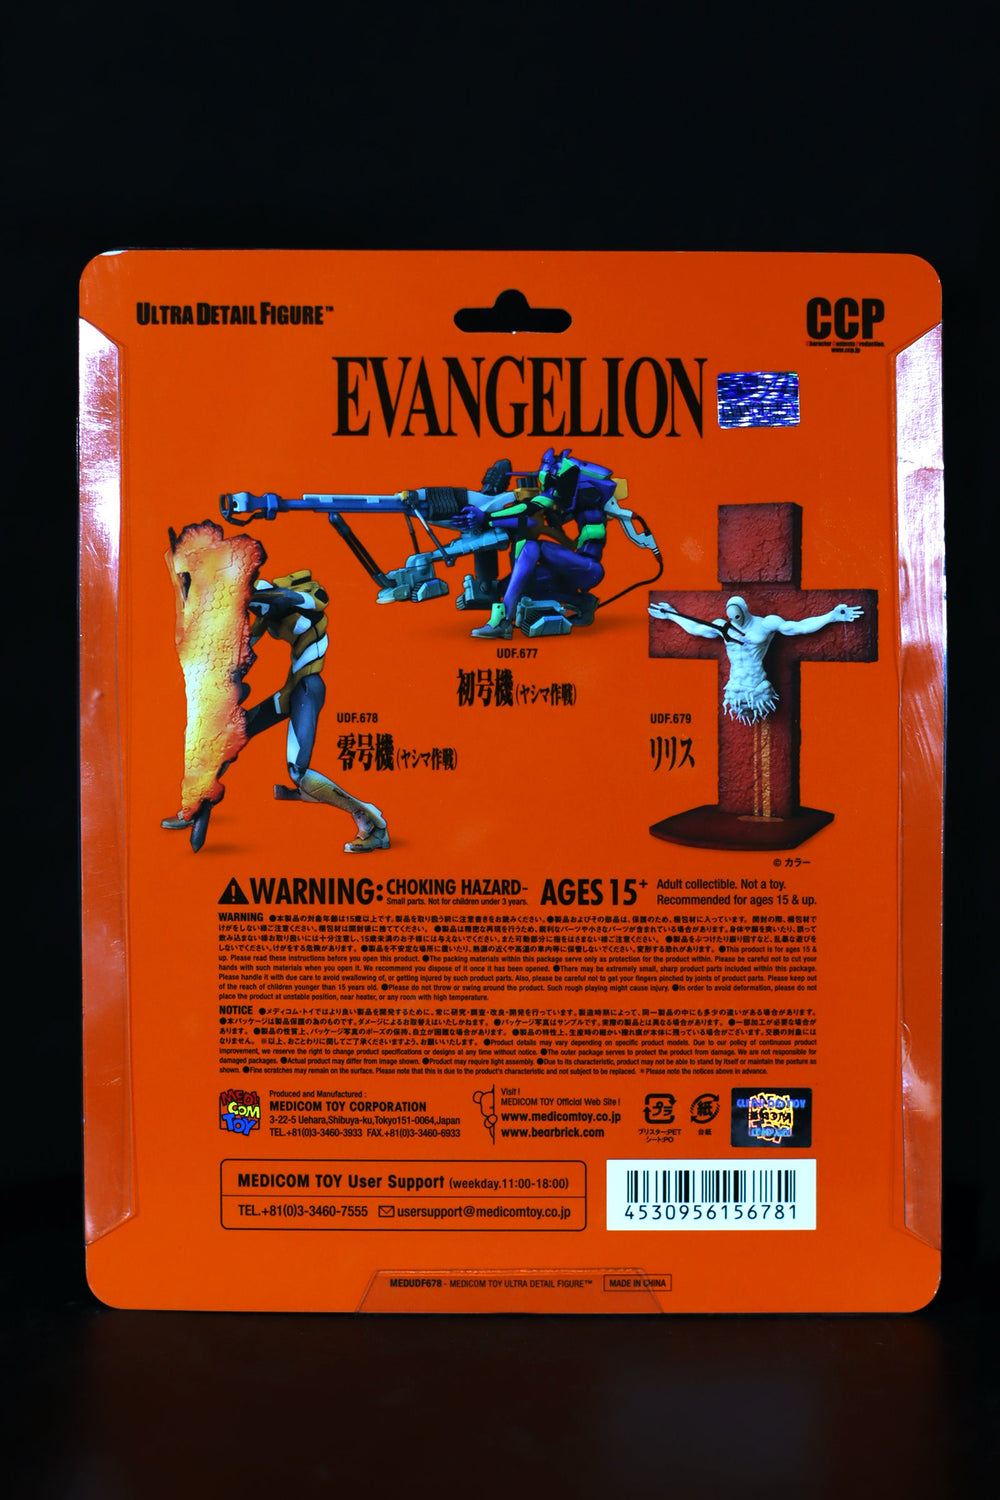 Evangelion: Ultra Detailed Figure "EVA 00"